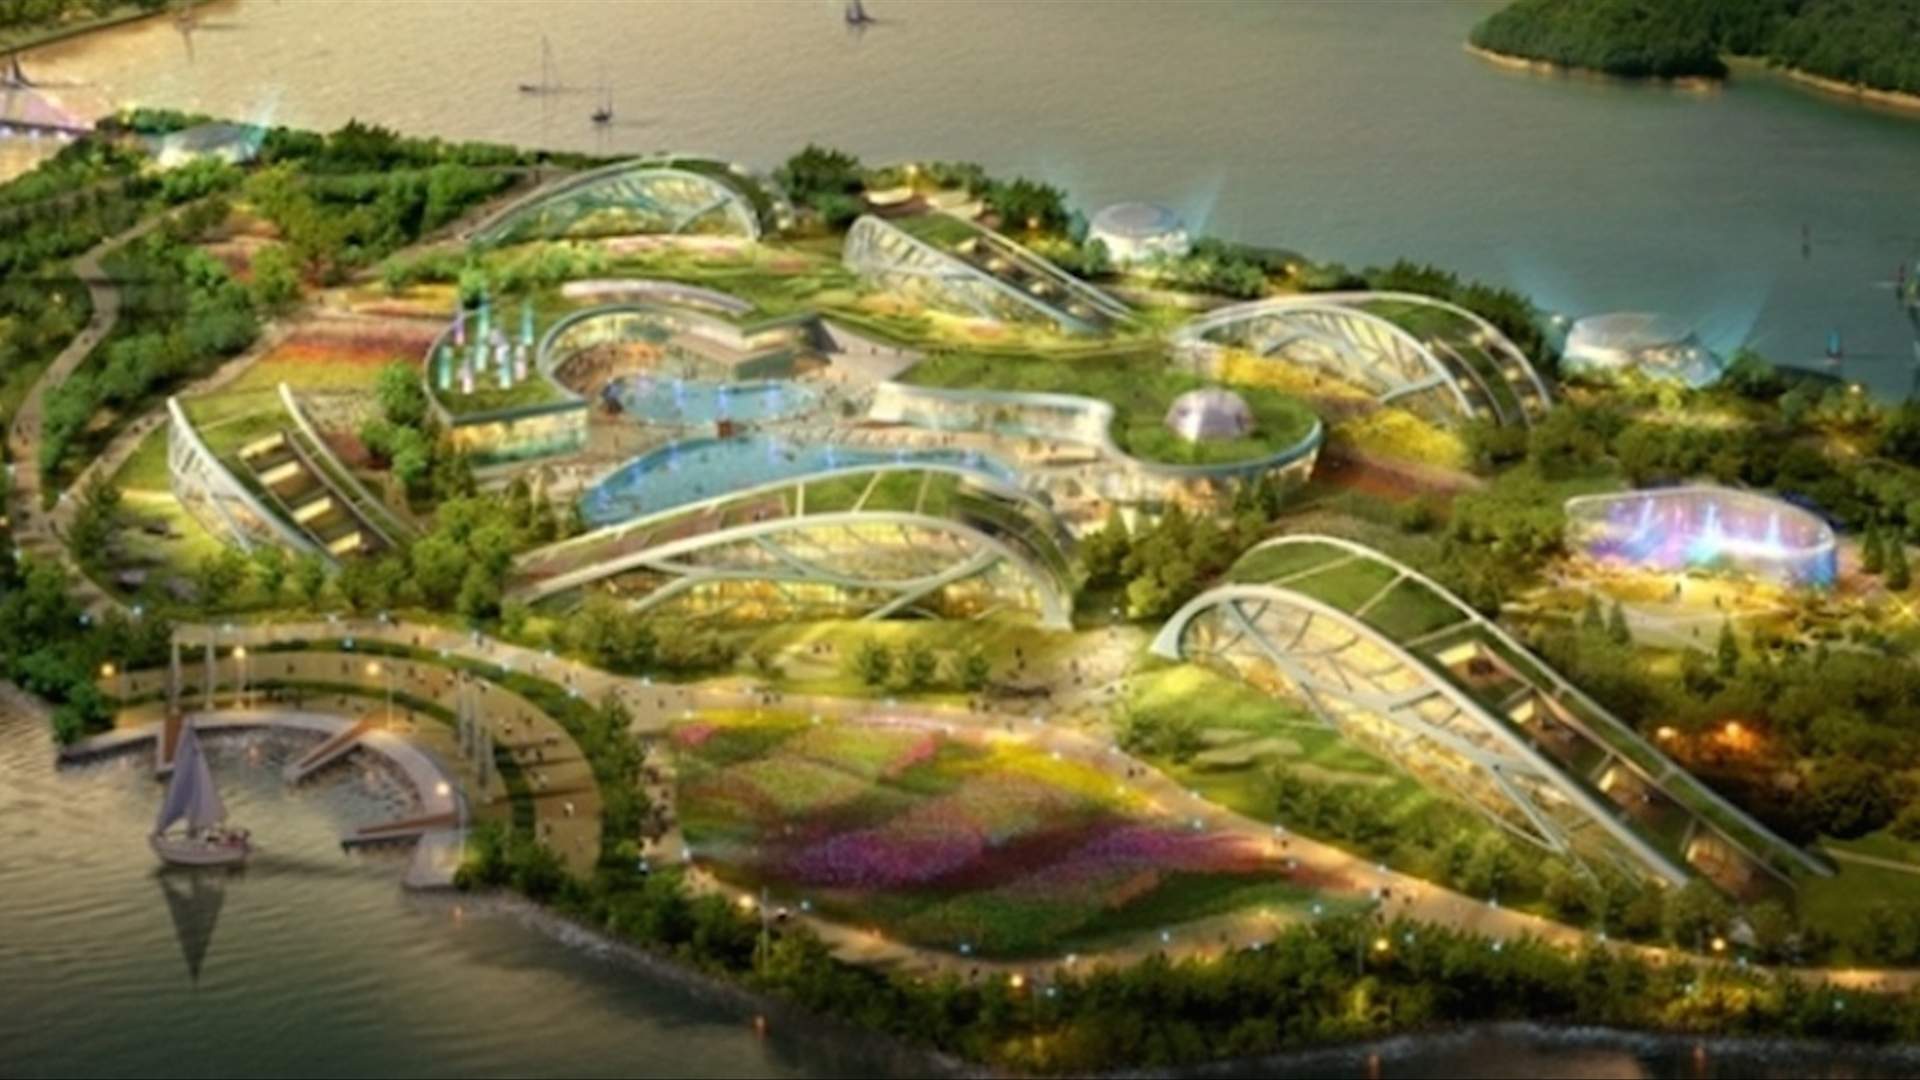 South Korea Is Brewing Up a $100 Million Coffee Theme Park - Concrete ...